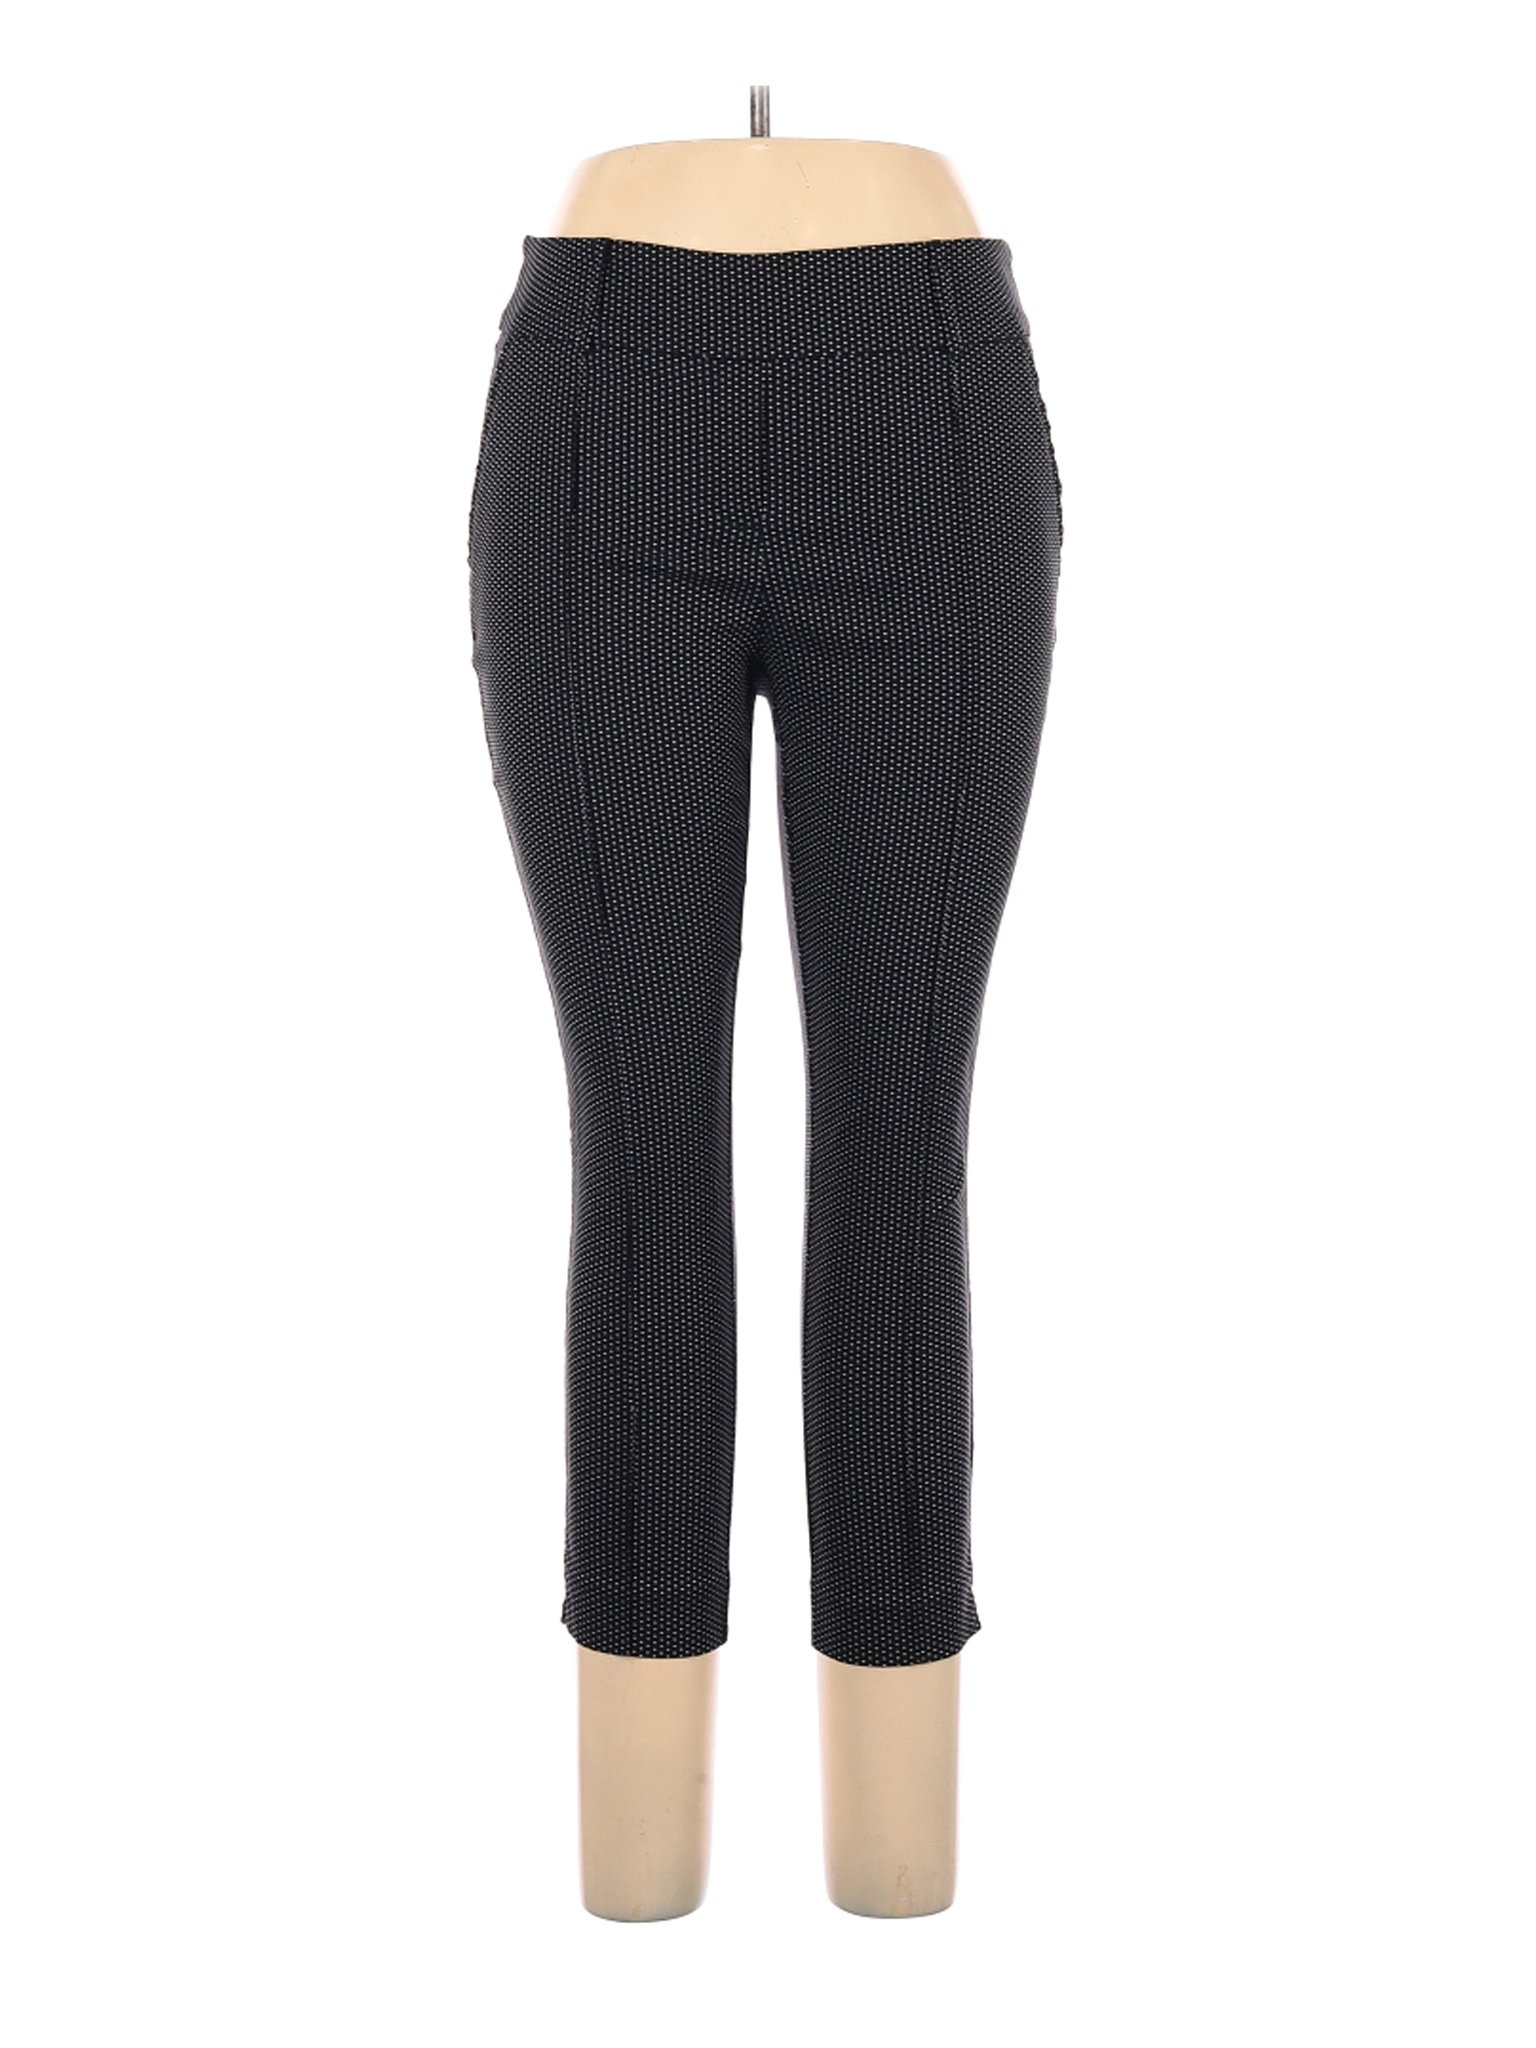 Jules & Leopold Women Black Casual Pants L | eBay